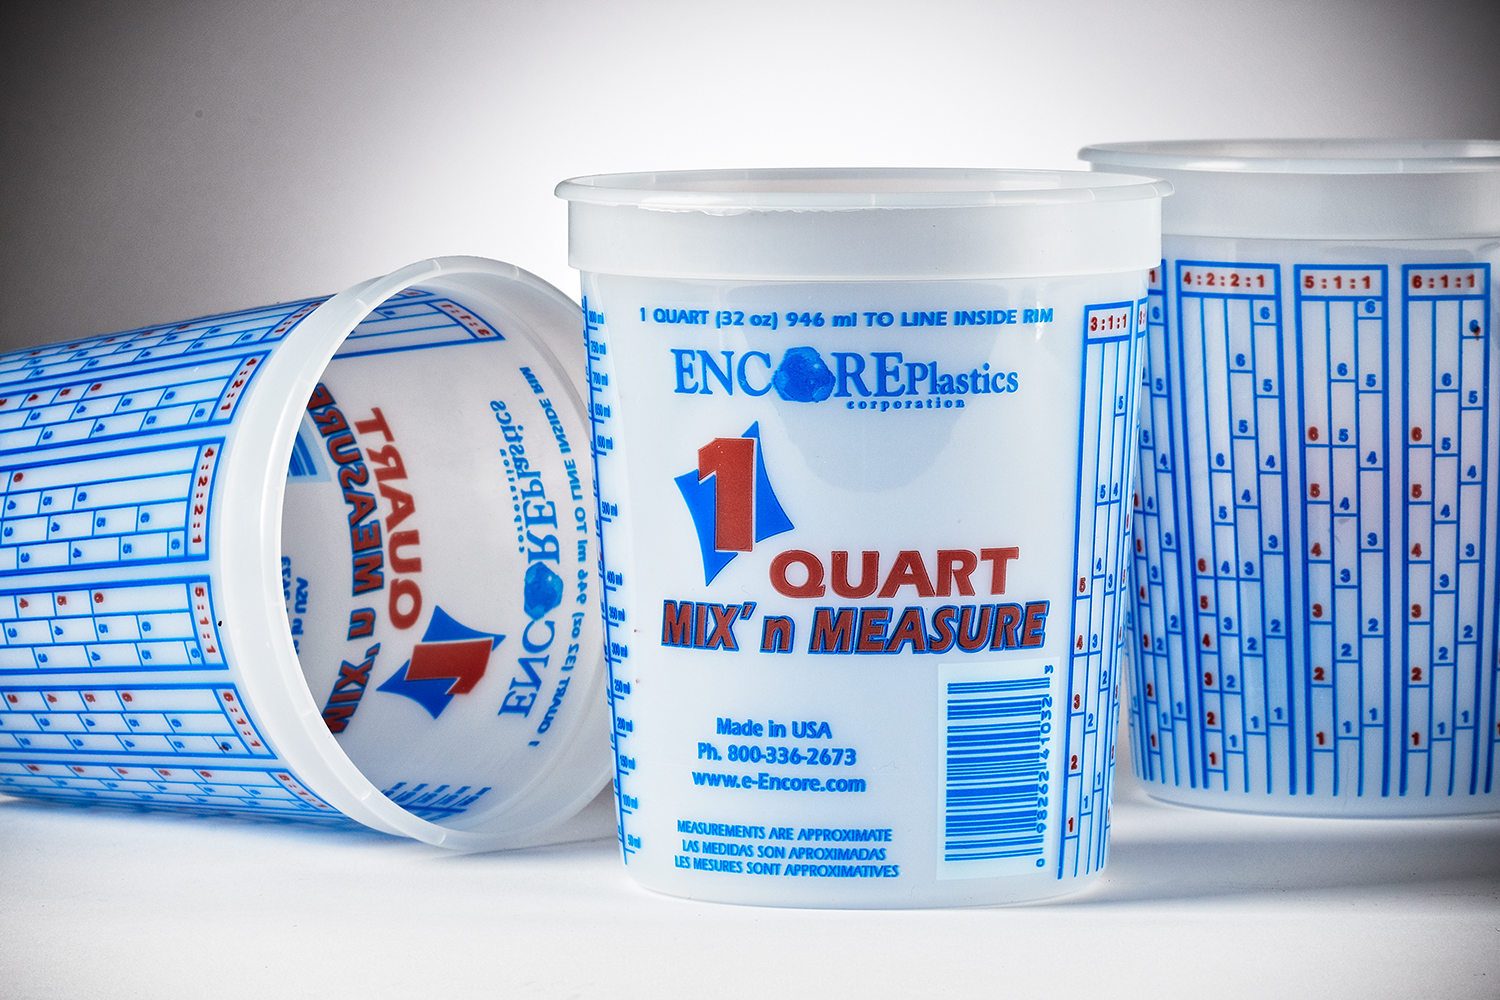 1-Pint Encore Plastics 41017 Mix N Measure Plastic Container